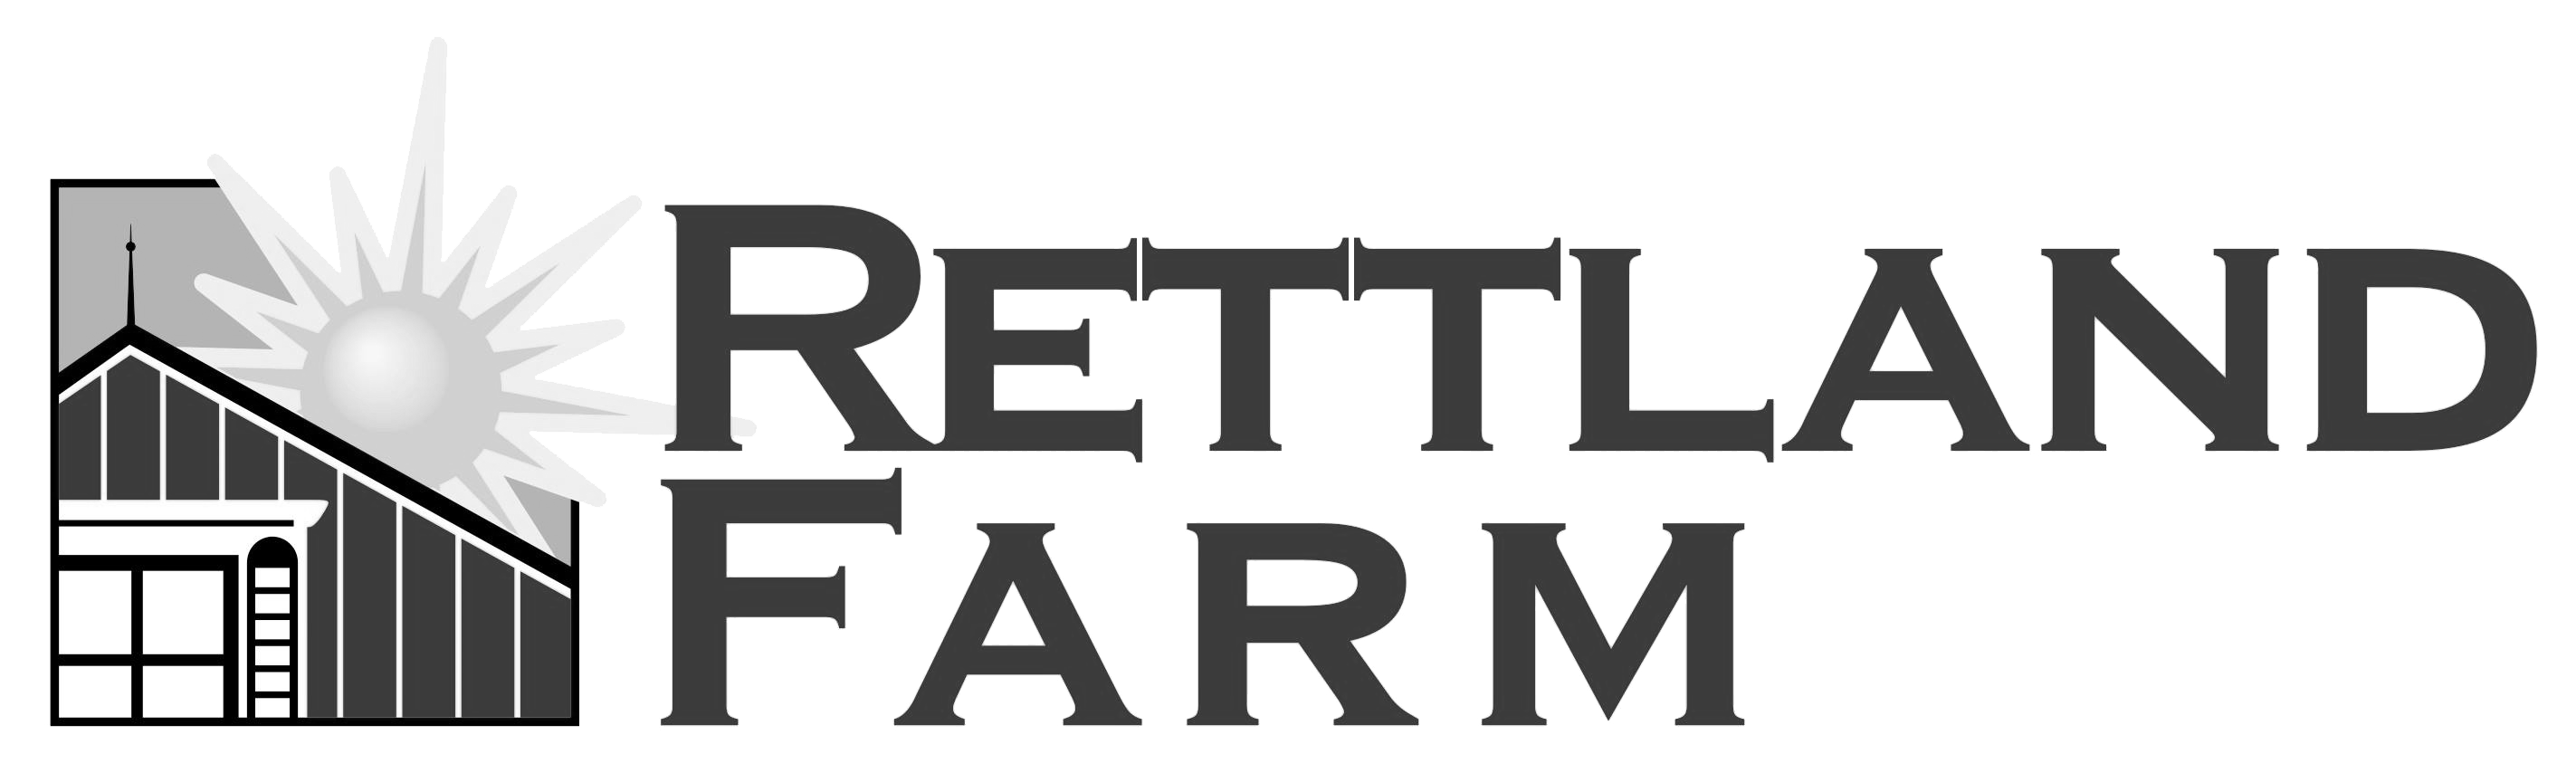 Rettland Farm logo.